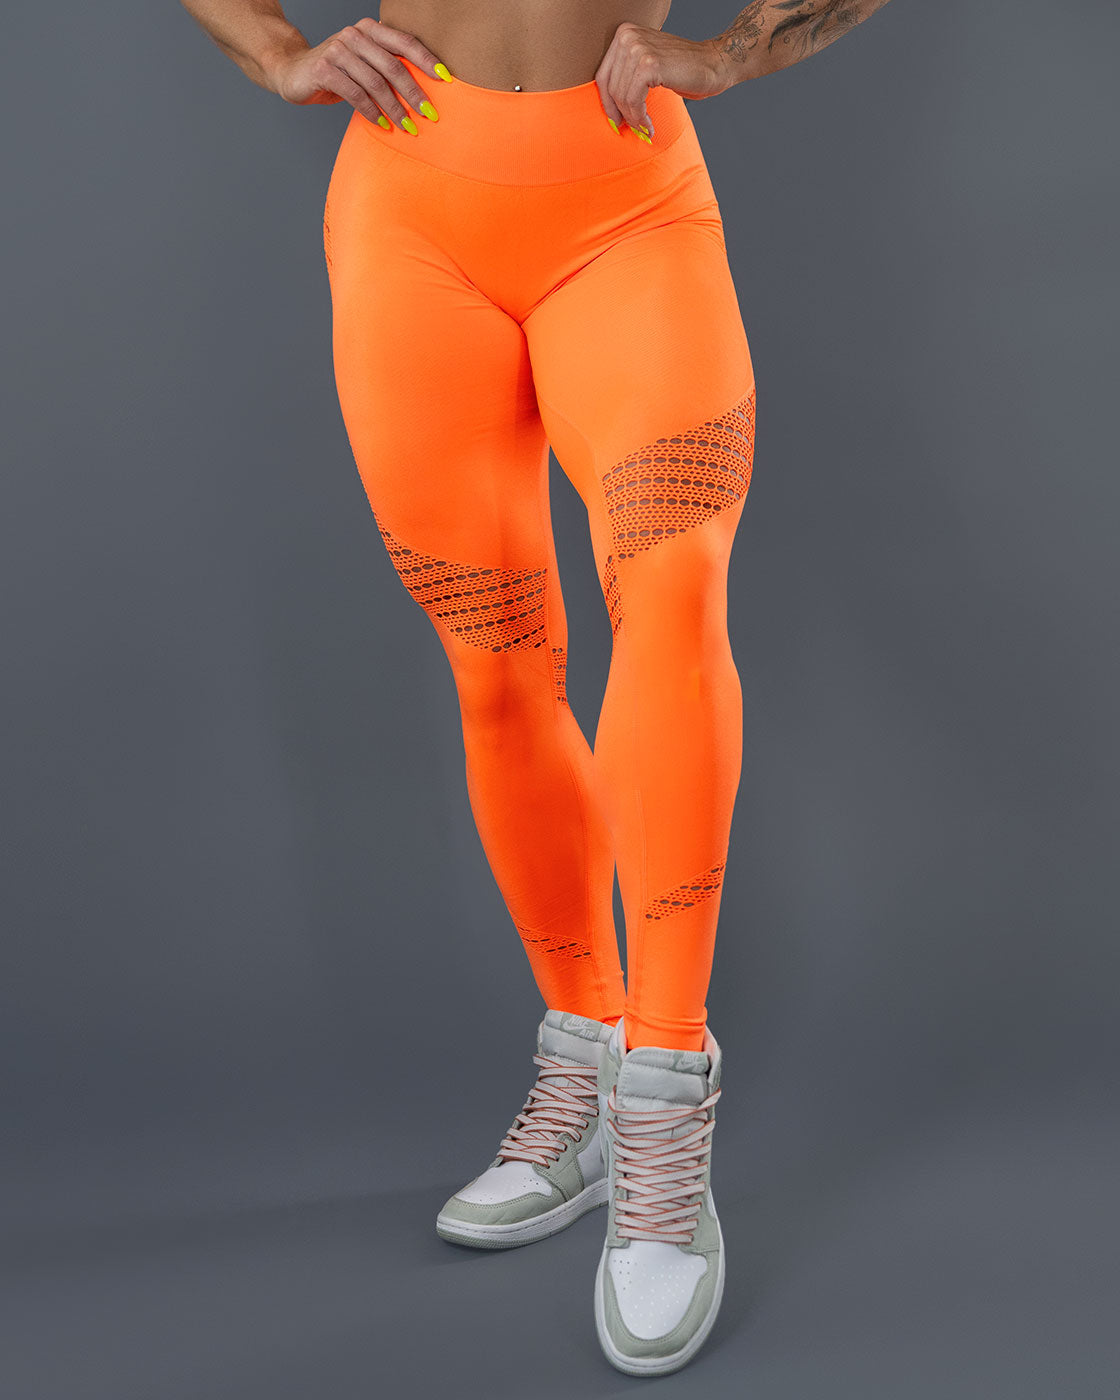 Honeycomb Pattern Textured Leggings - Neon Orange - Just $3